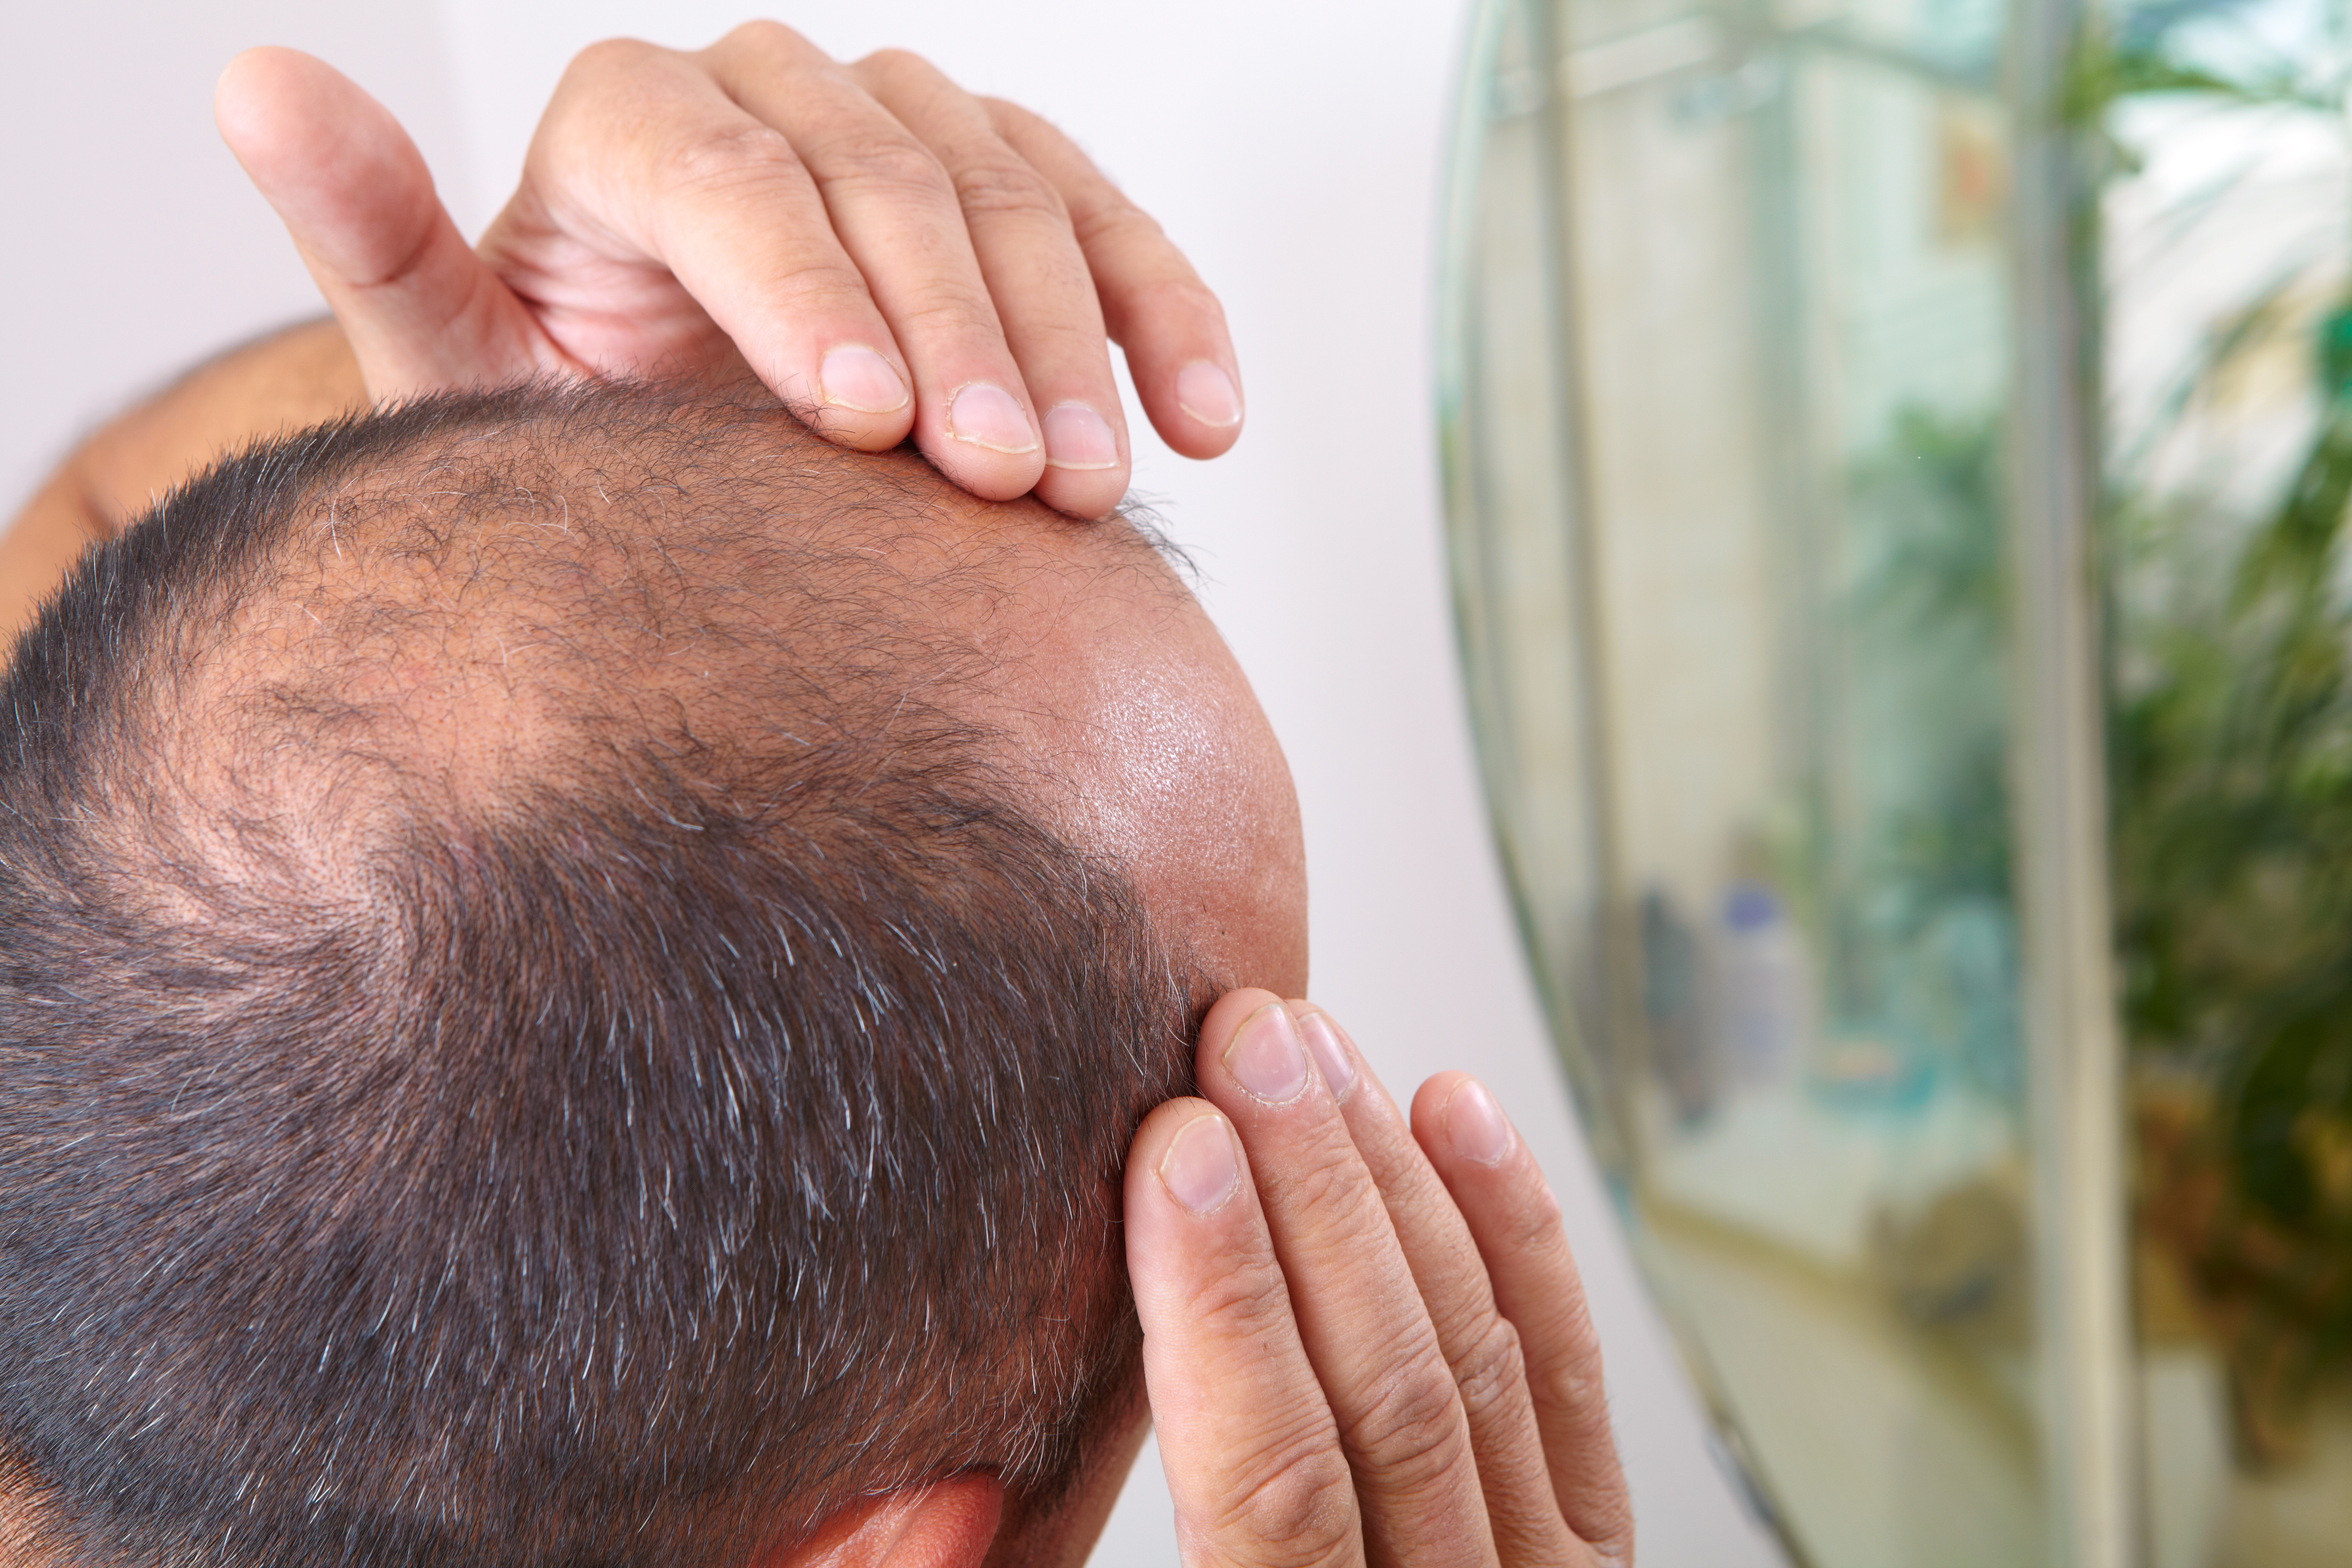 Hair loss may be a coronavirus symptom, study finds